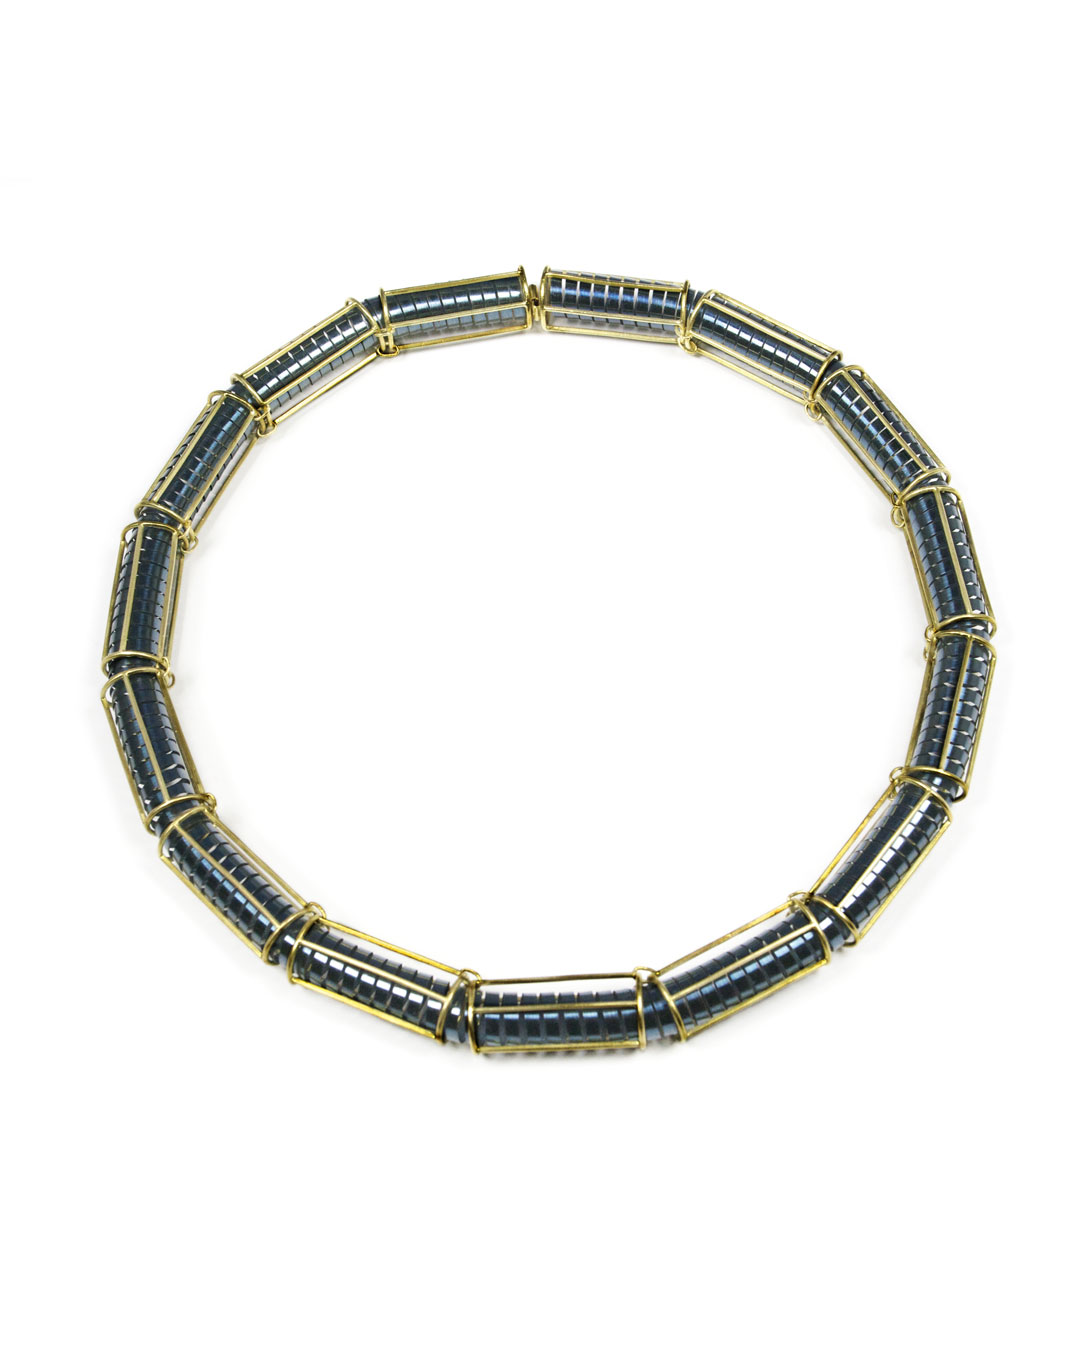 Okinari Kurokawa, untitled, 2013, necklace; 18ct gold, stainless steel, 220 x 220 x 14 mm, price on request